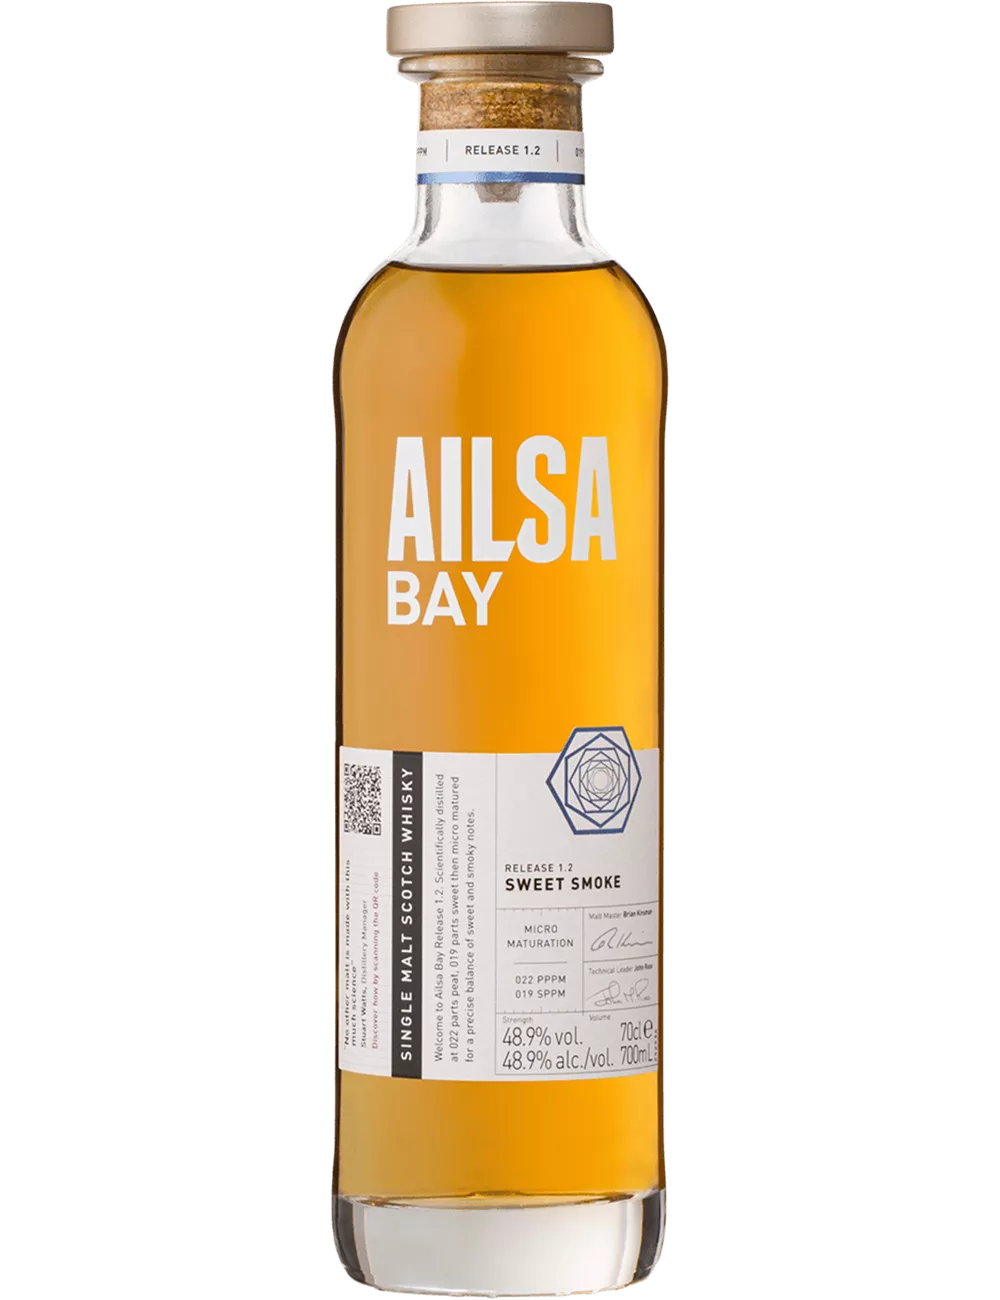 Ailsa Bay - Single malt